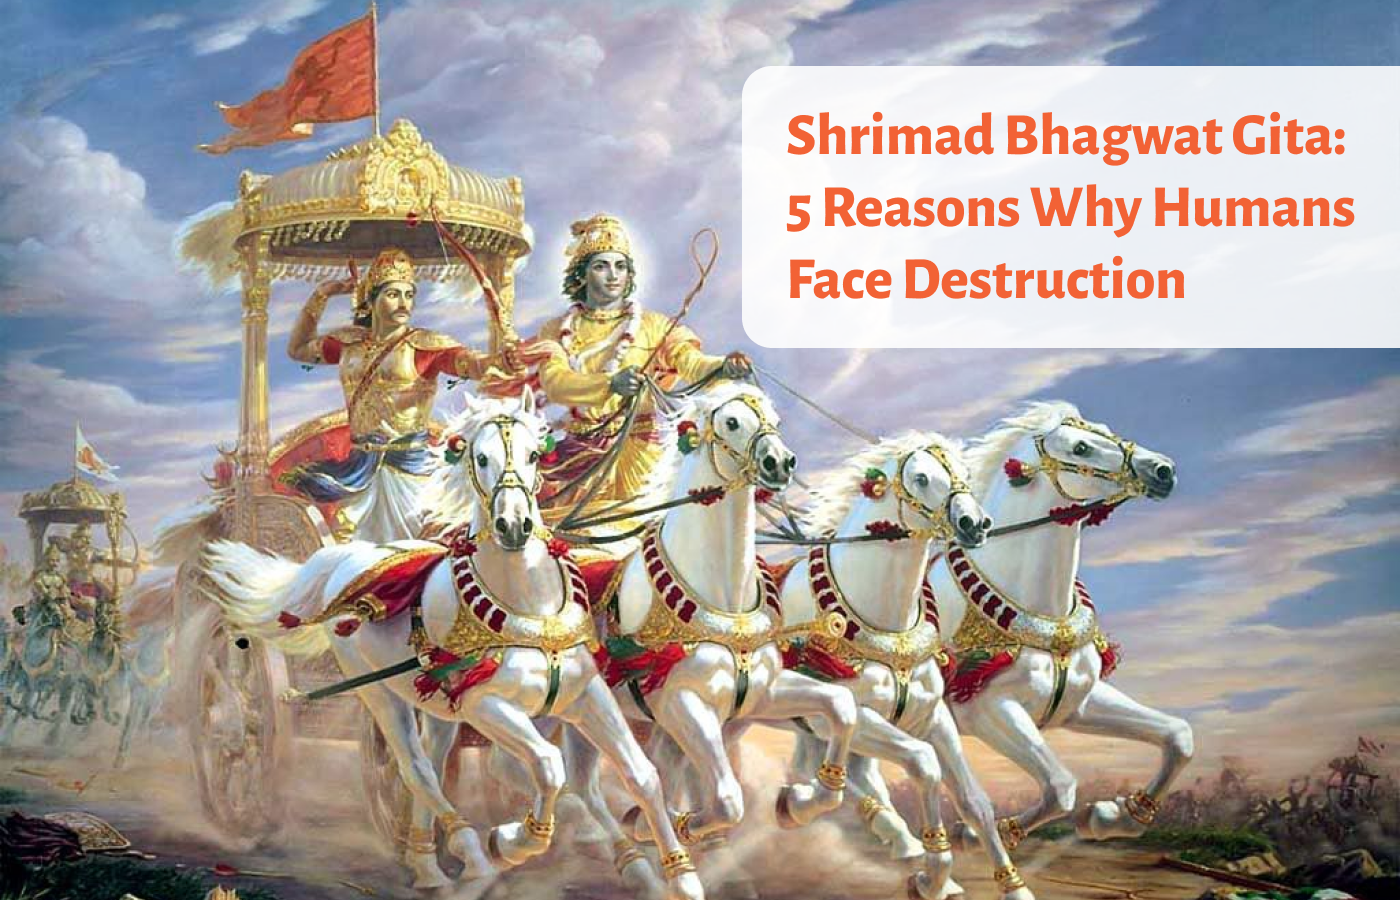 Shrimad Bhagwat Gita: 5 reasons why humans face destruction